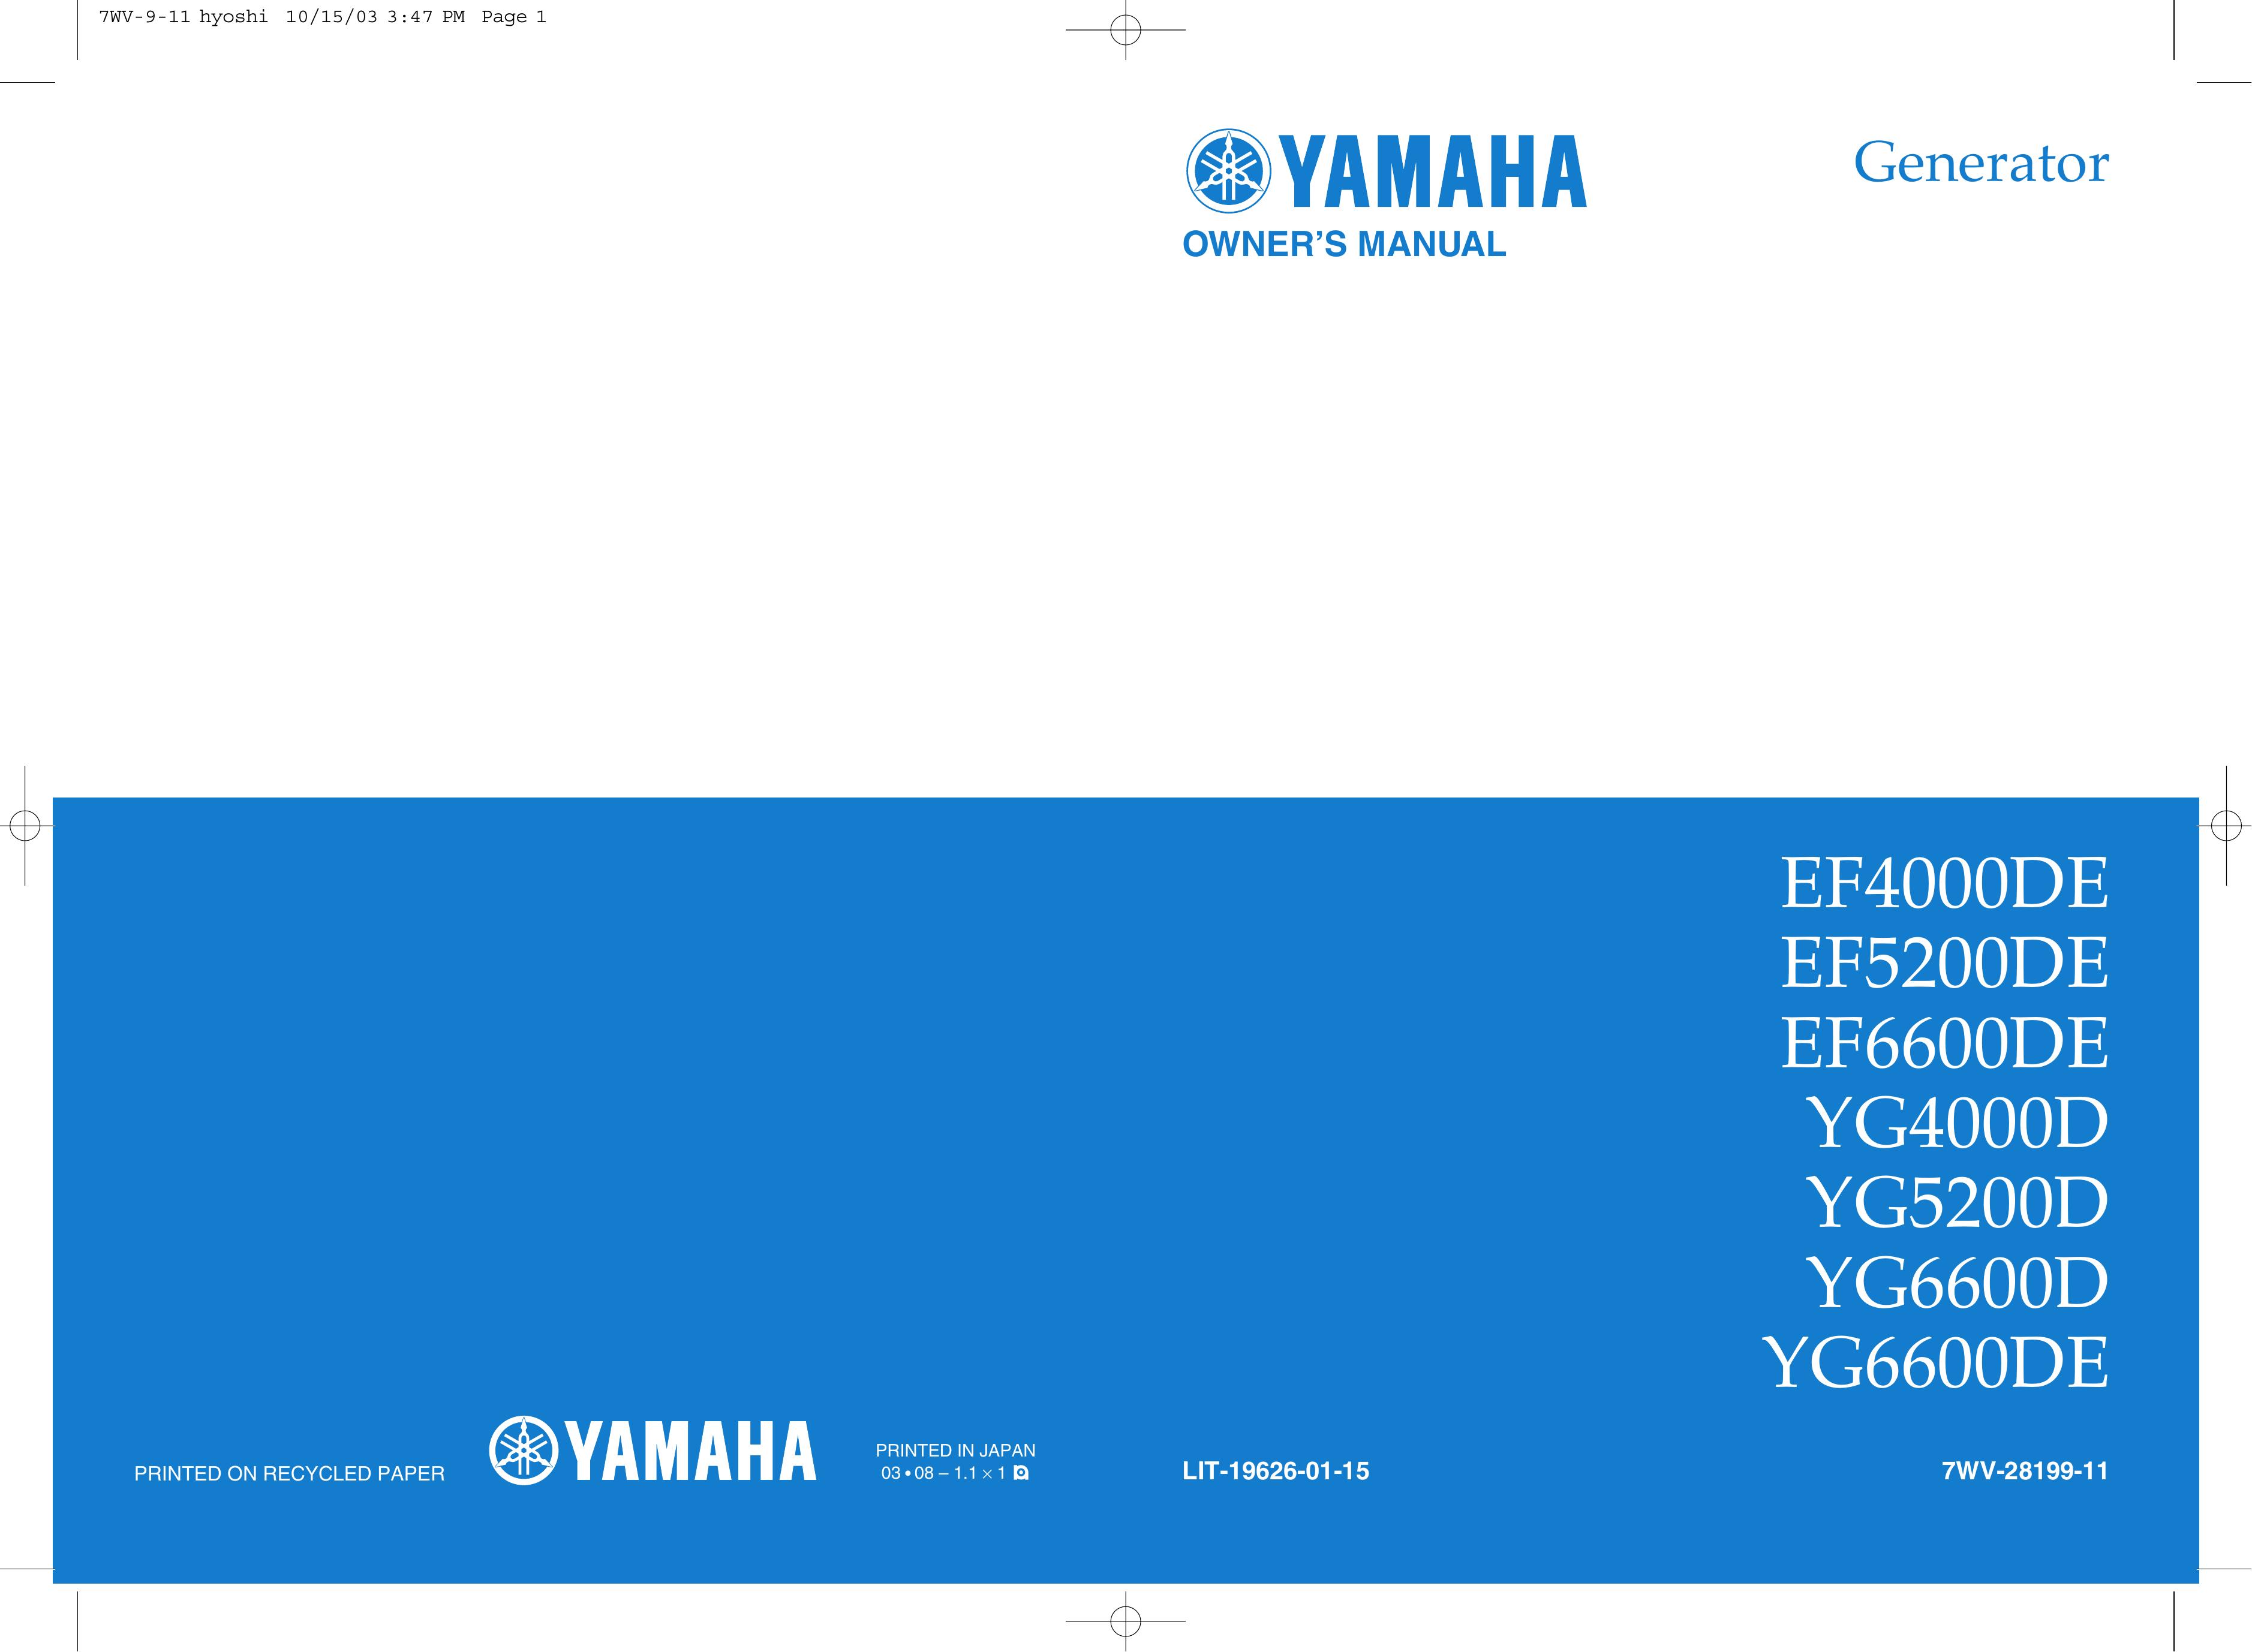 Yamaha Yg6600de Portable Generator User Manual (Page 1)